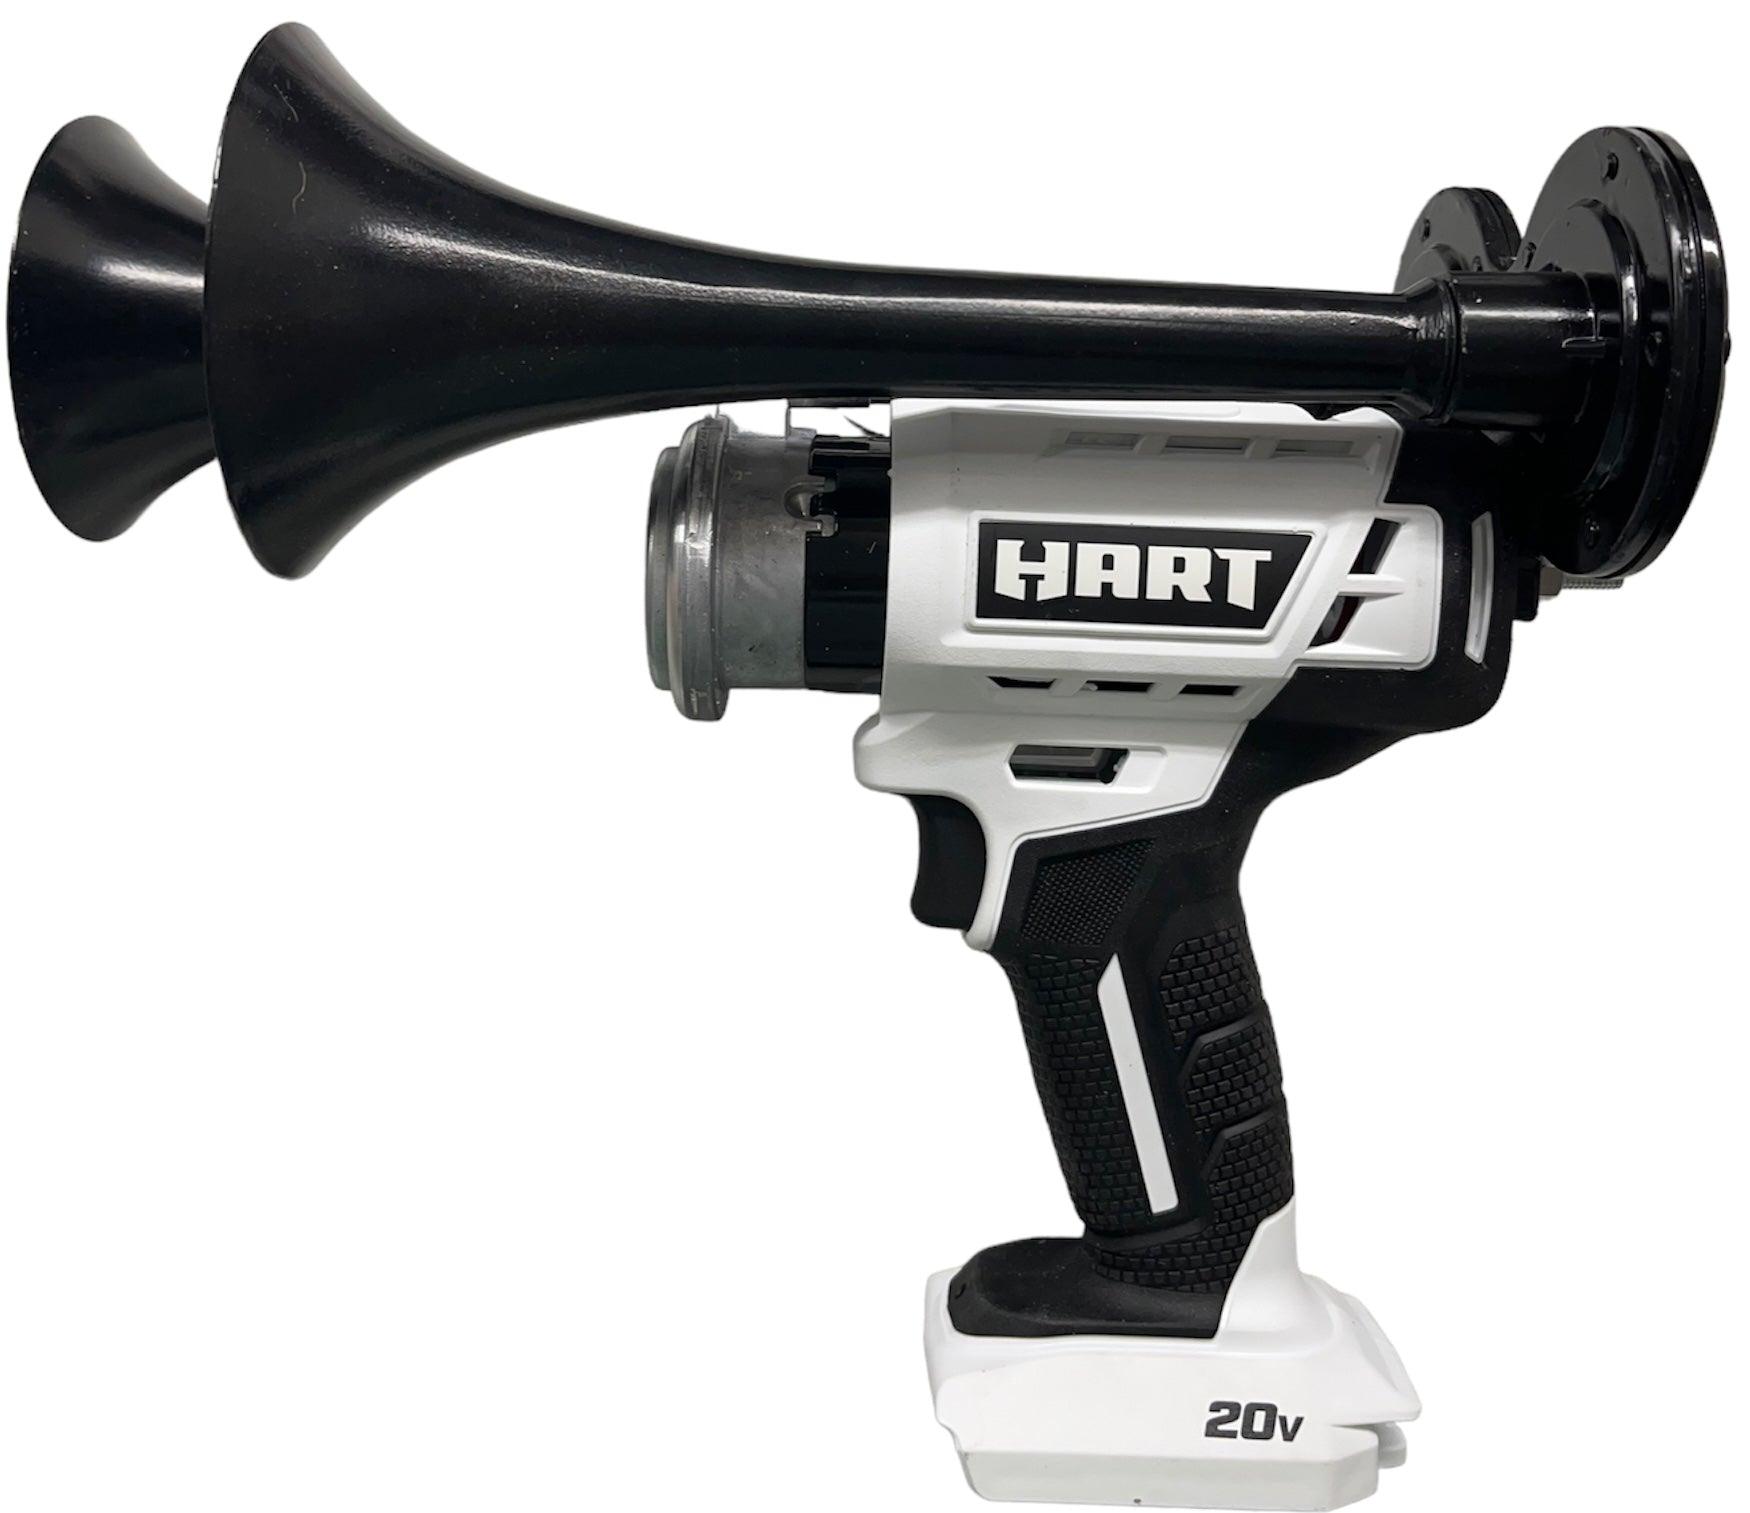 Buy Powerful Hart Train Horn Gun with Remote Control – Horngun